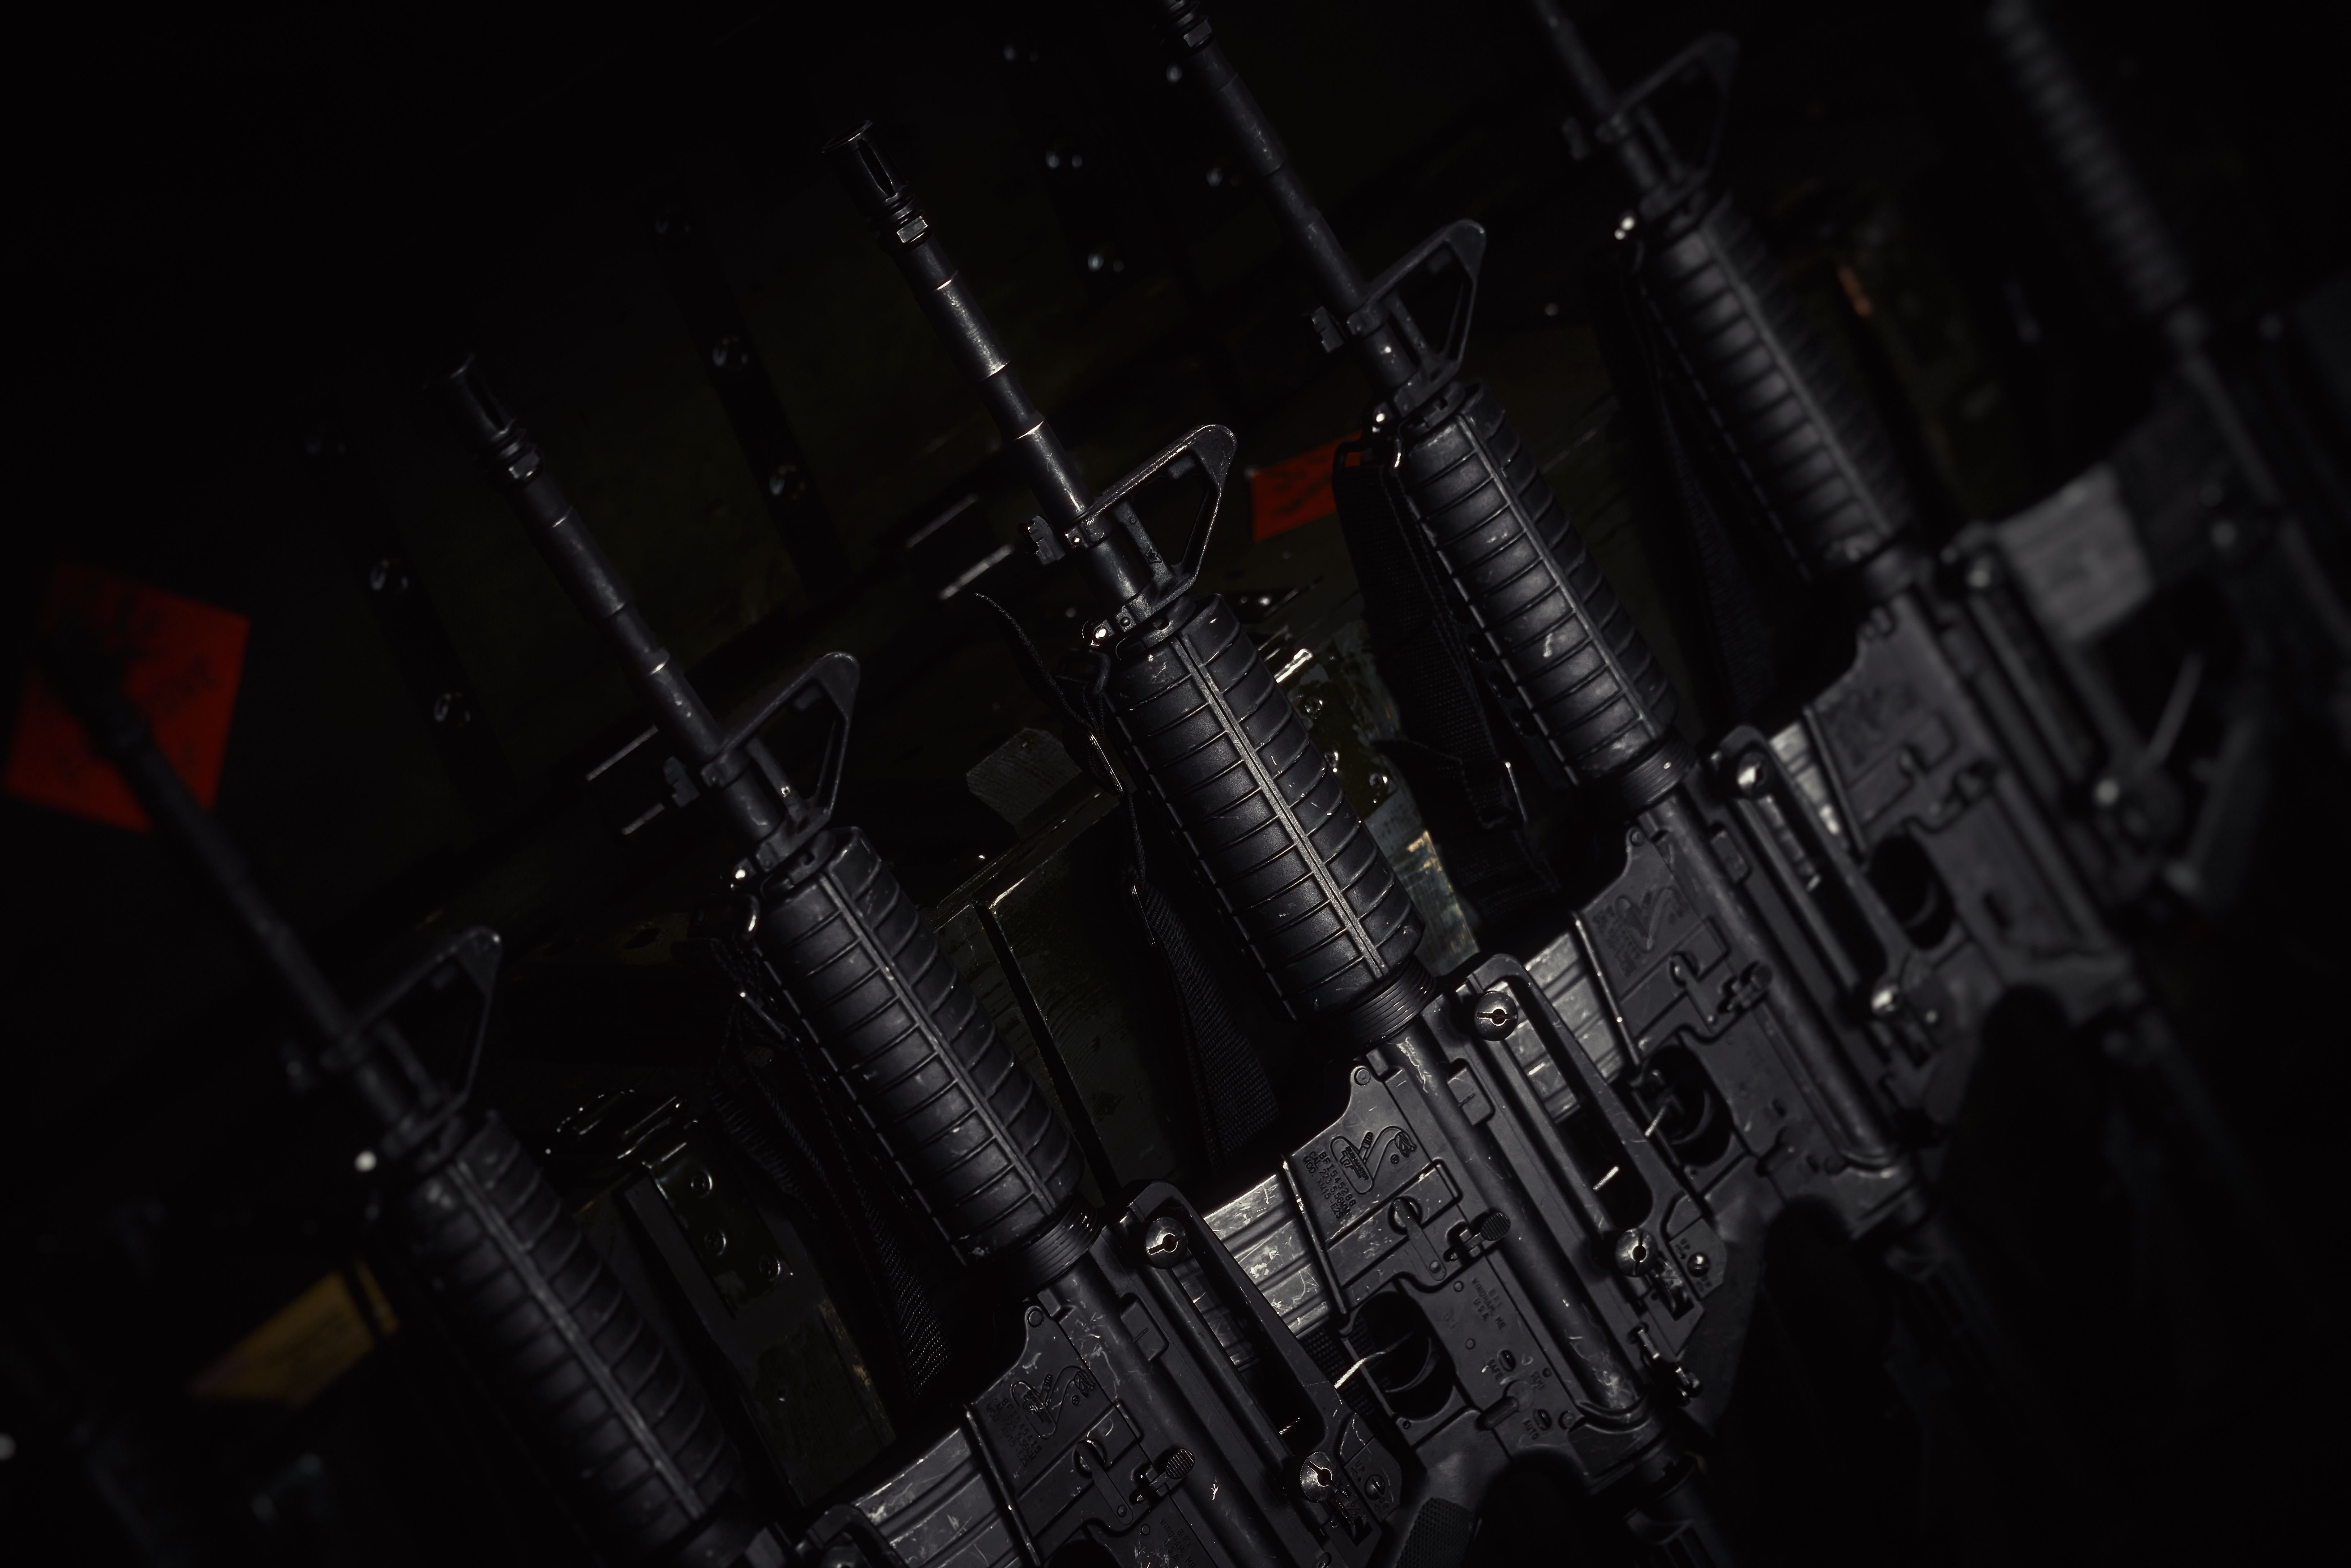 AR-15 type semi-automatic rifles, XM 15 - E2S produced by Bushmaster Firearms International, LLC, AR-15 Caliber 223 Remington - 5.56 45mm NATO. Gun background for gun fans. 19.08.2022 Moscow, Russia